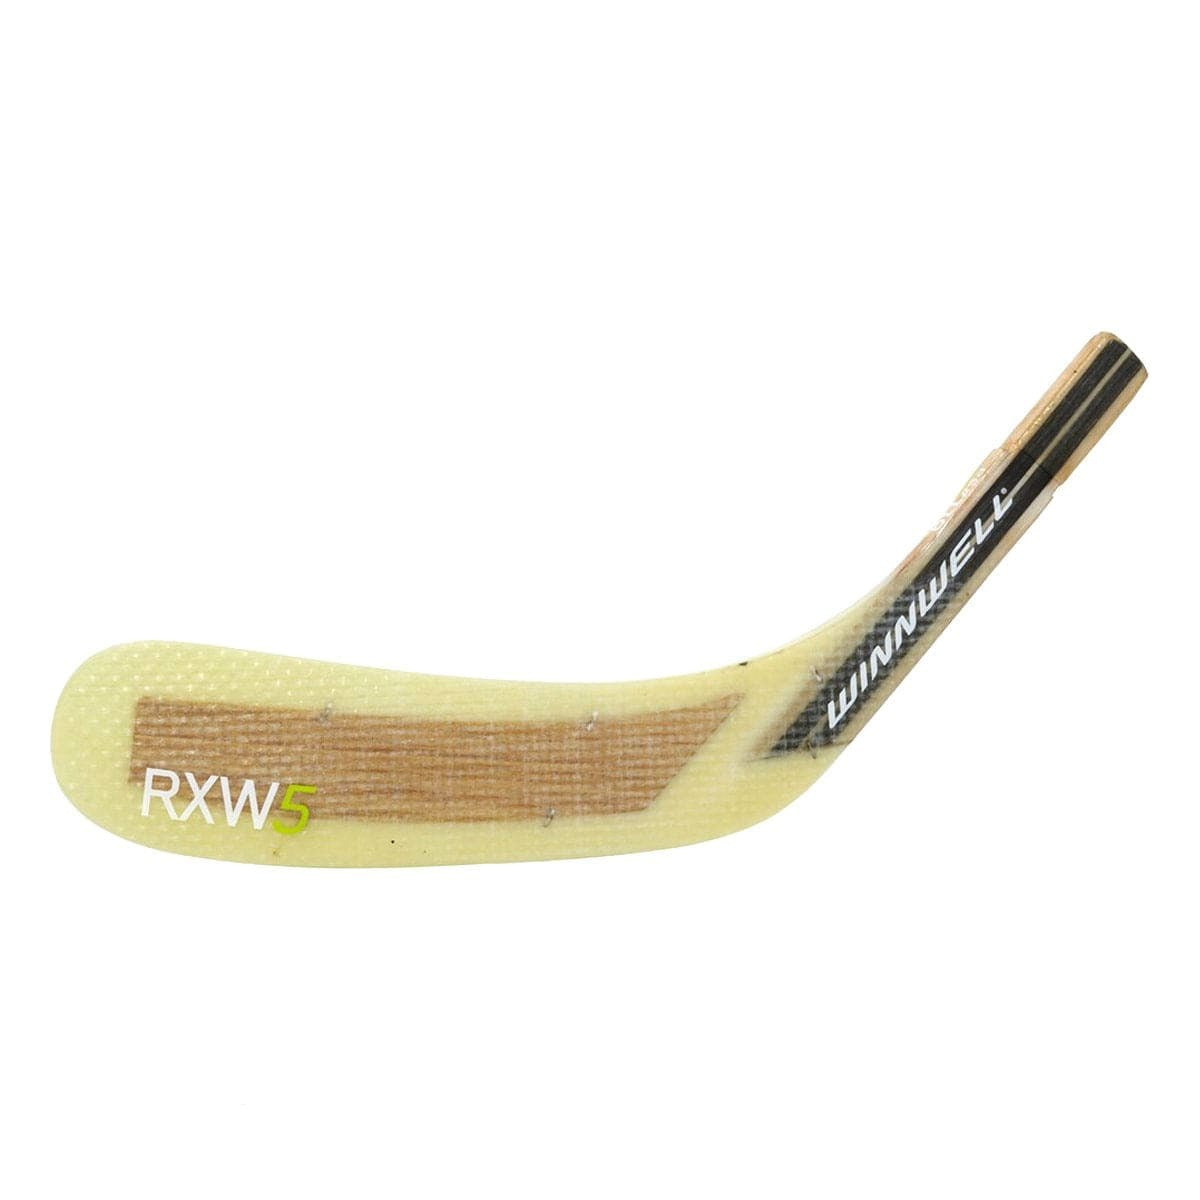 Winnwell RXW5 Senior Wood Hockey Blade